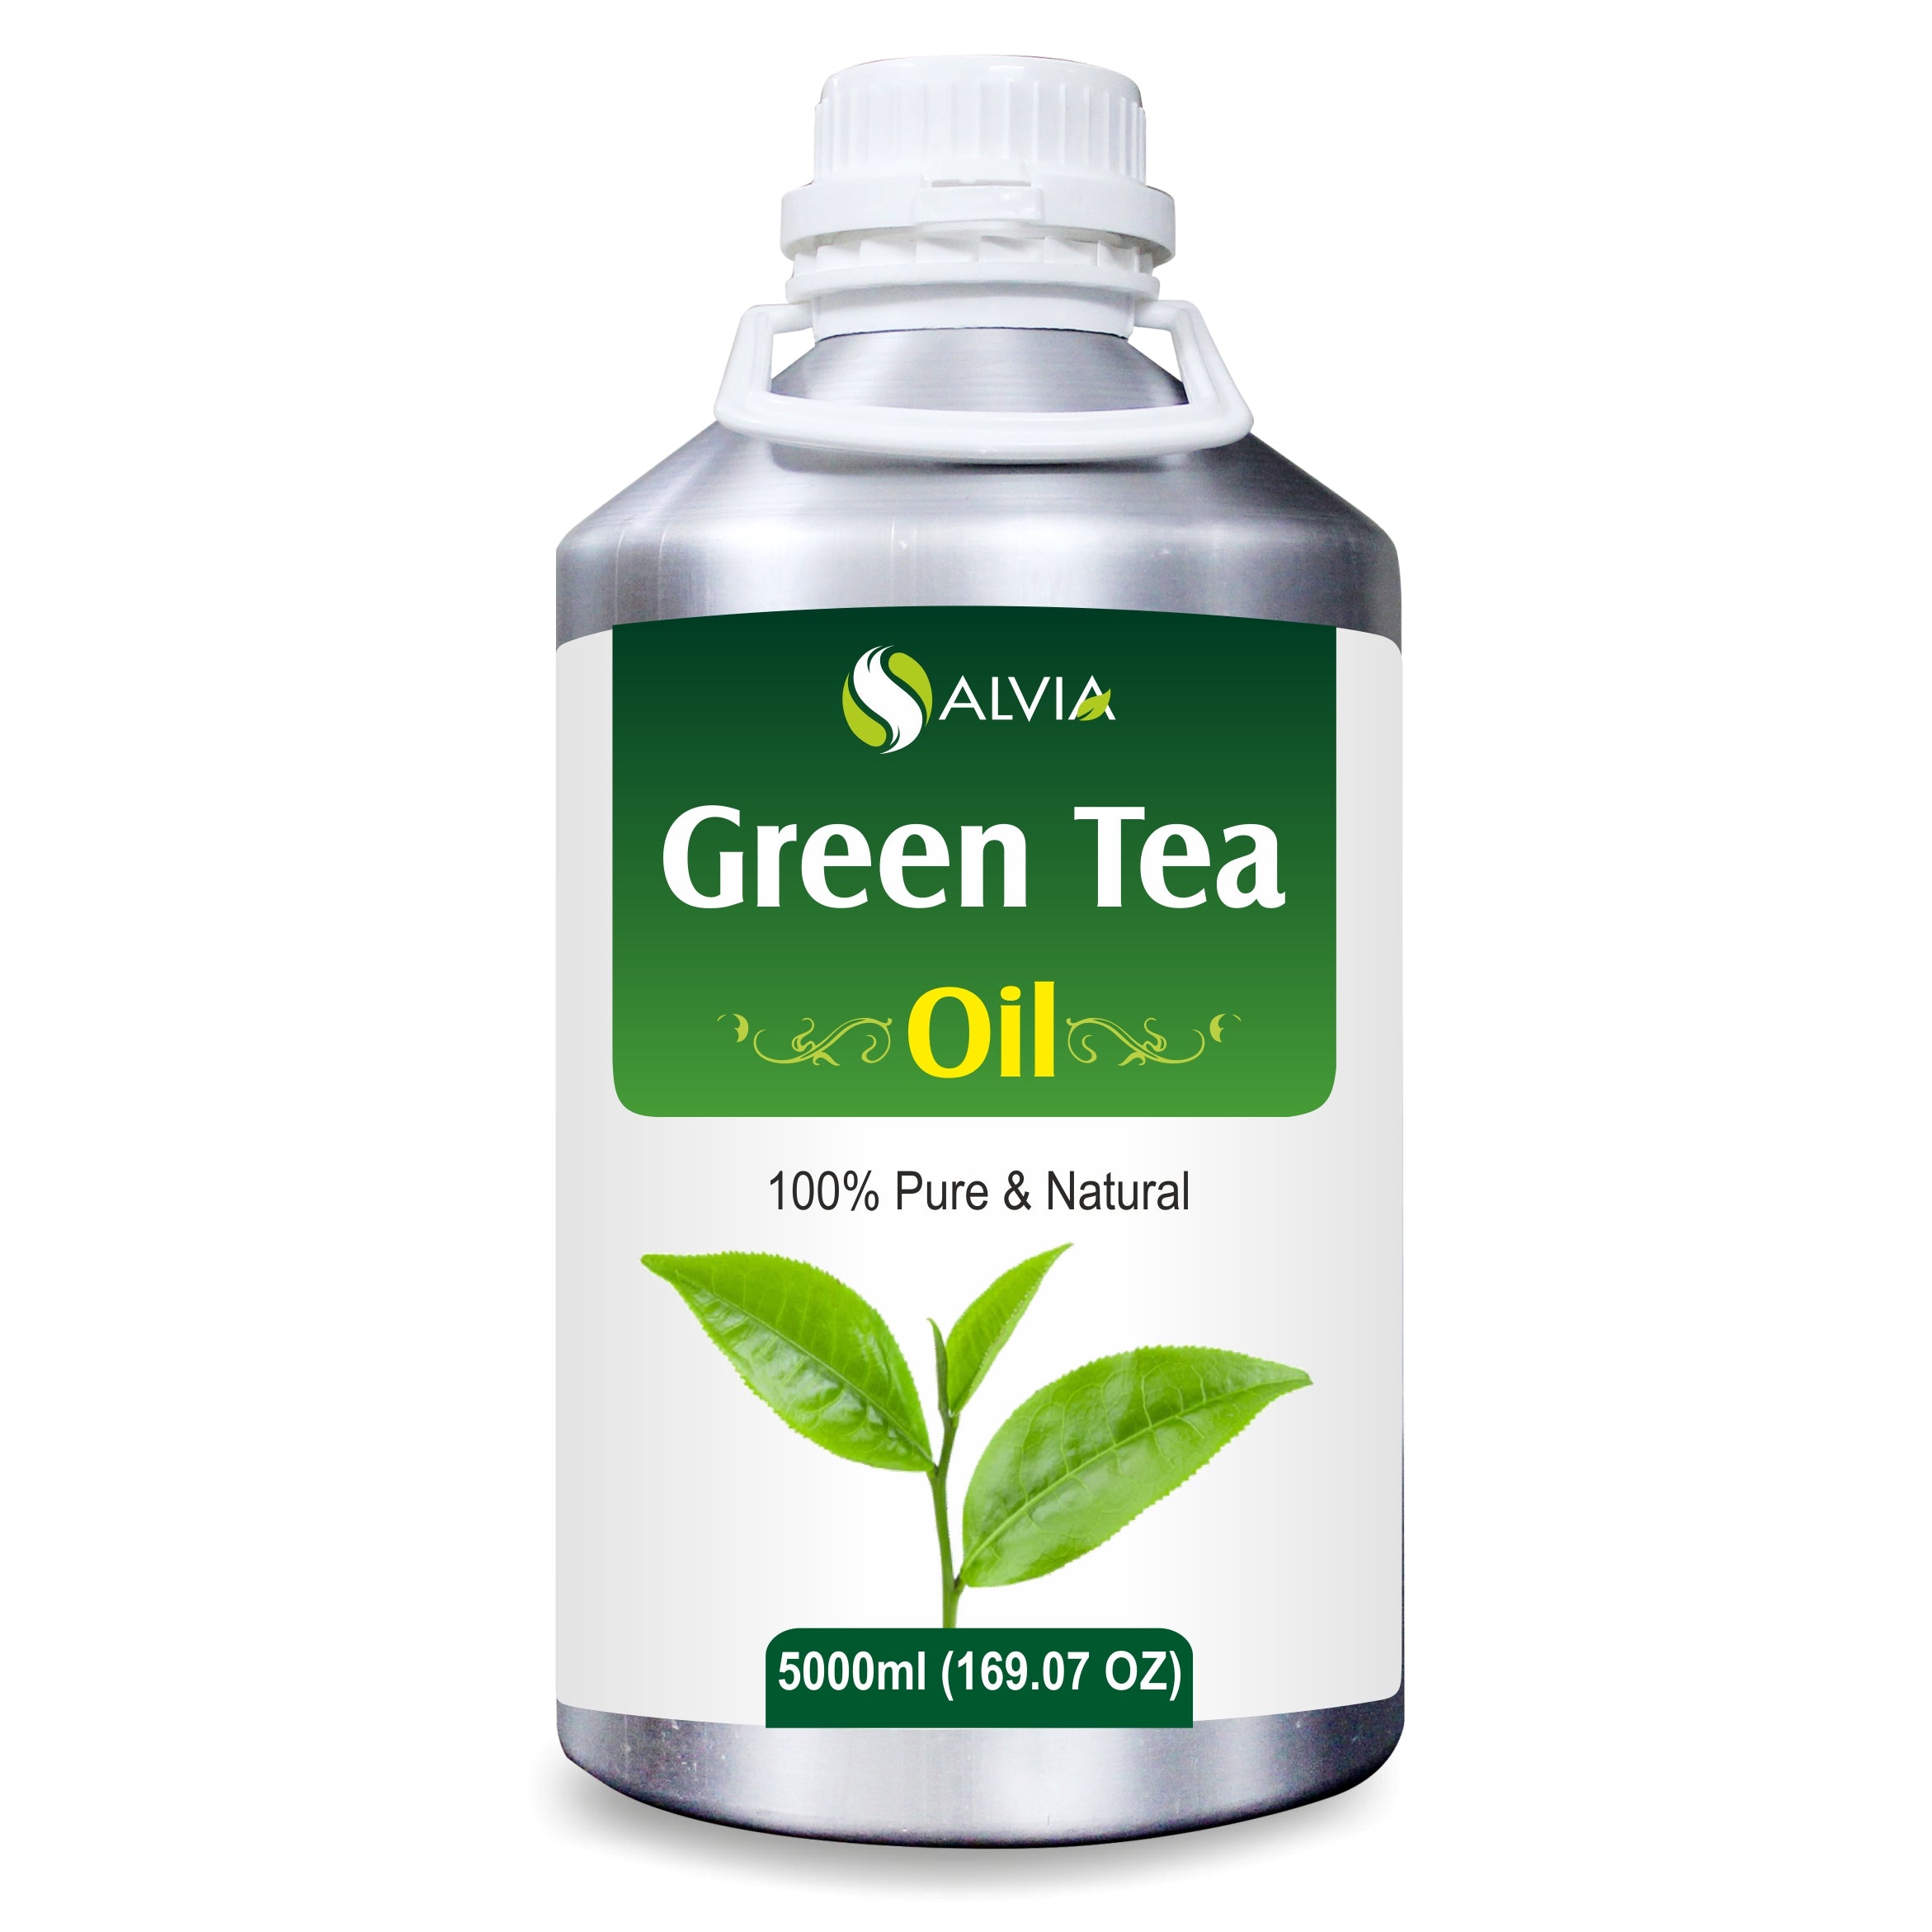 Salvia Natural Carrier Oils 5000ml Green Tea Oil